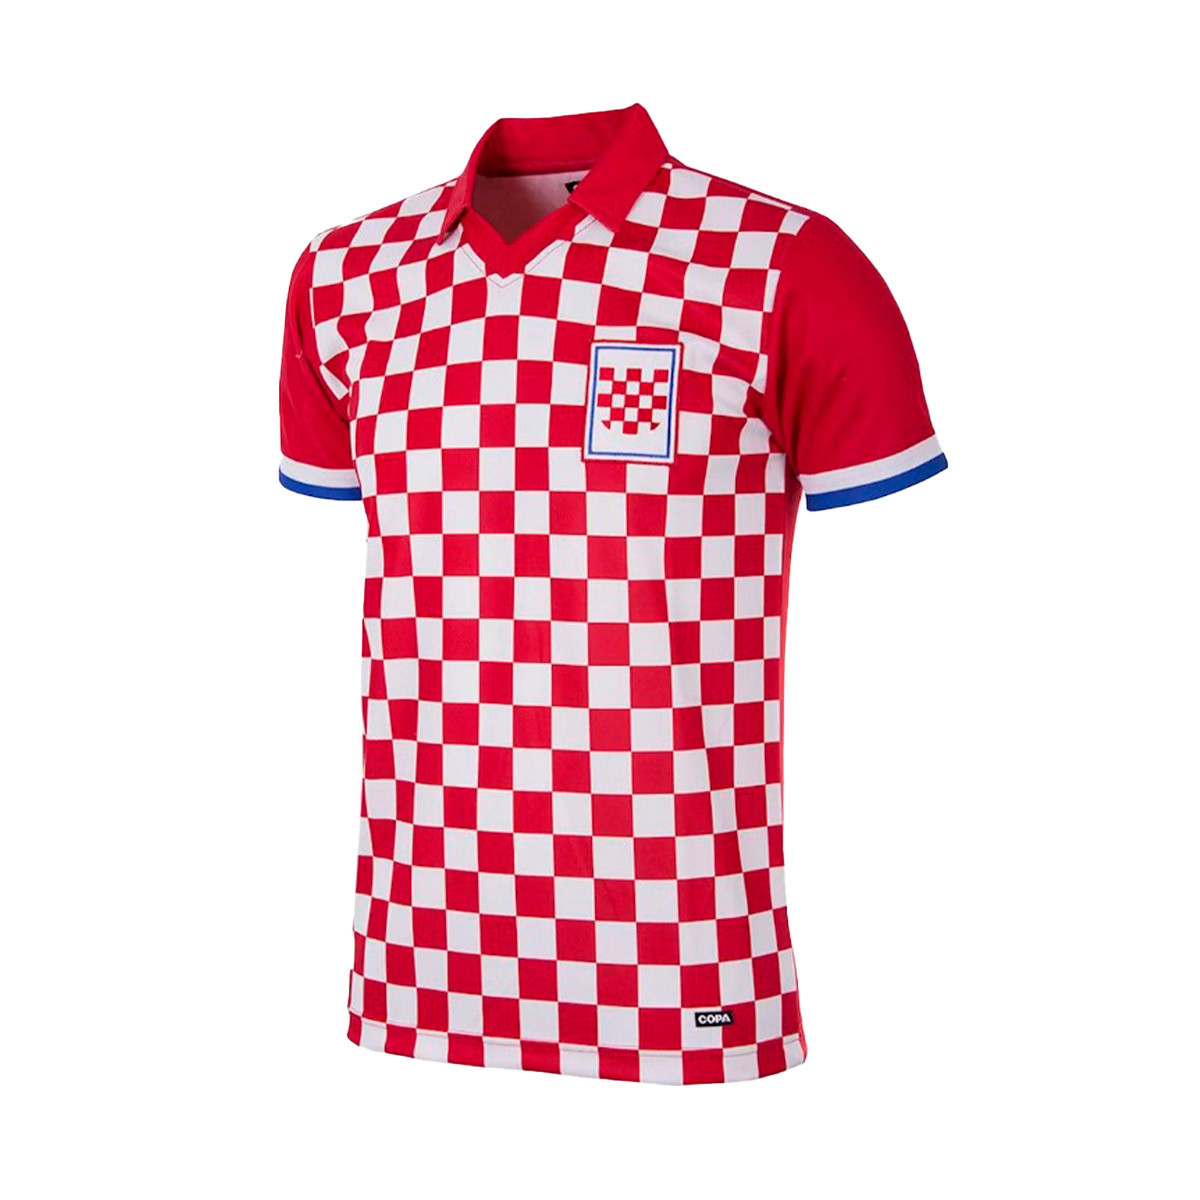 Jersey COPA Croatia 1990 Retro Football Red-White - Emotion